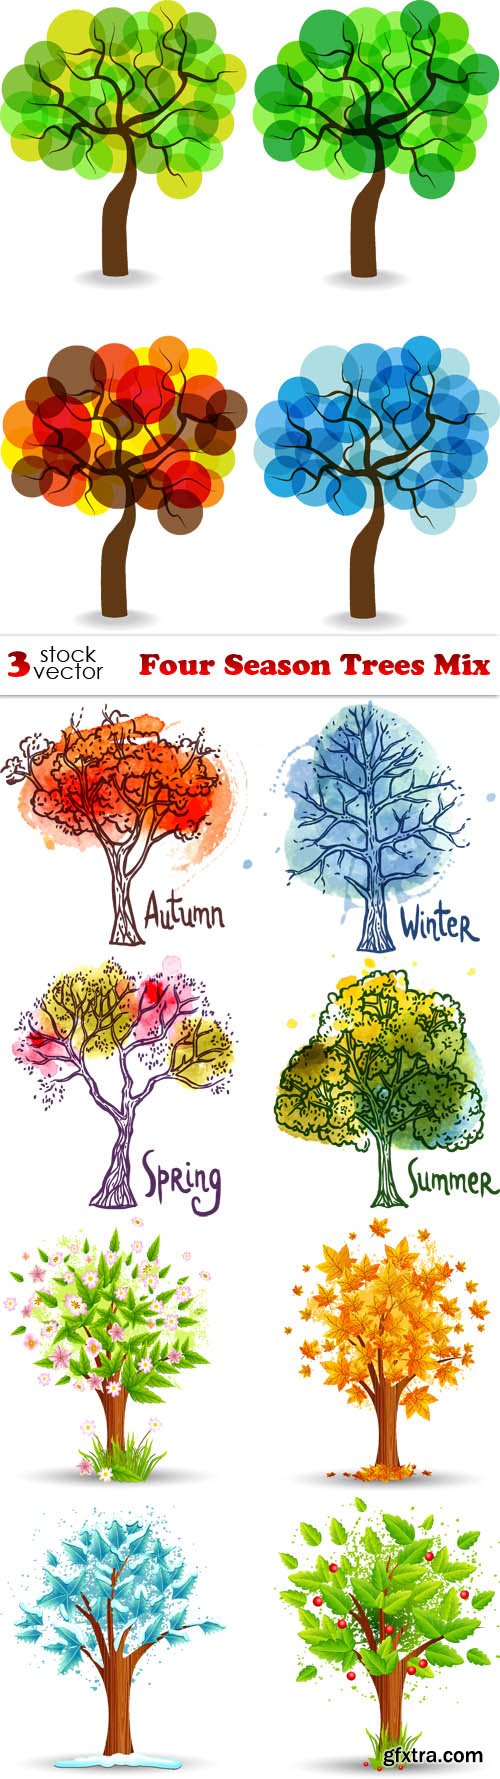 Vectors - Four Season Trees Mix